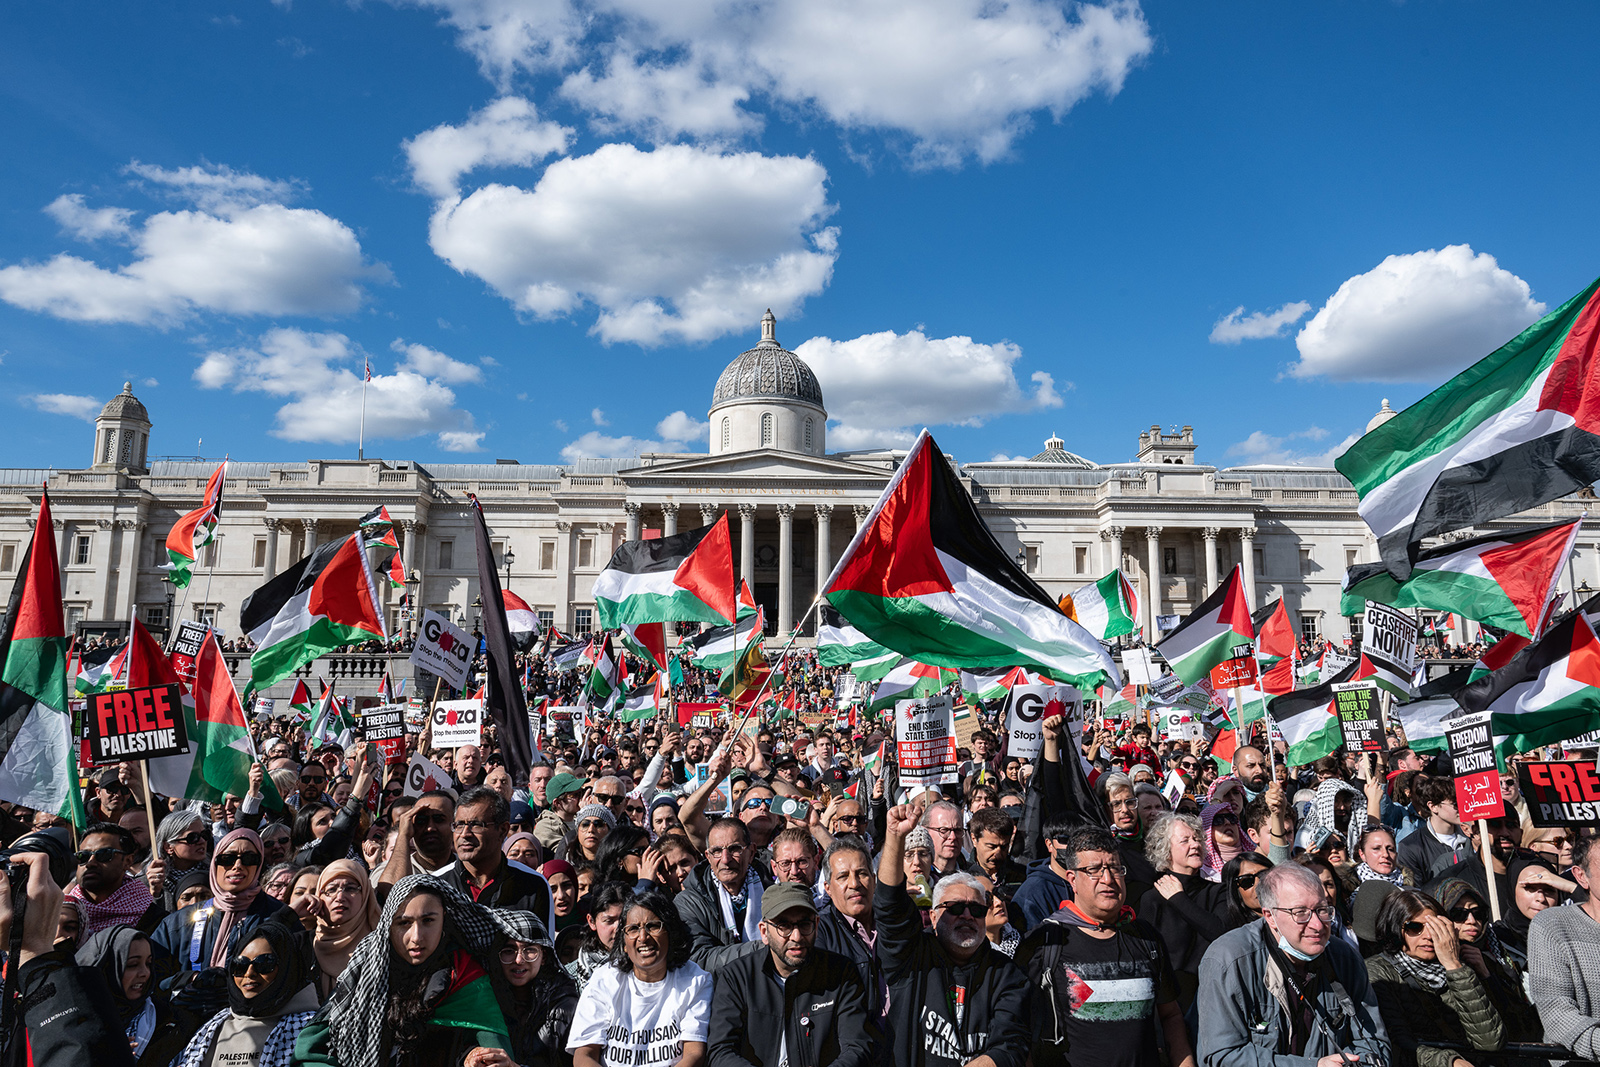 A crowd of Pro-Palestine demonstrators in London's trafalgar square wave Palestinian flags.